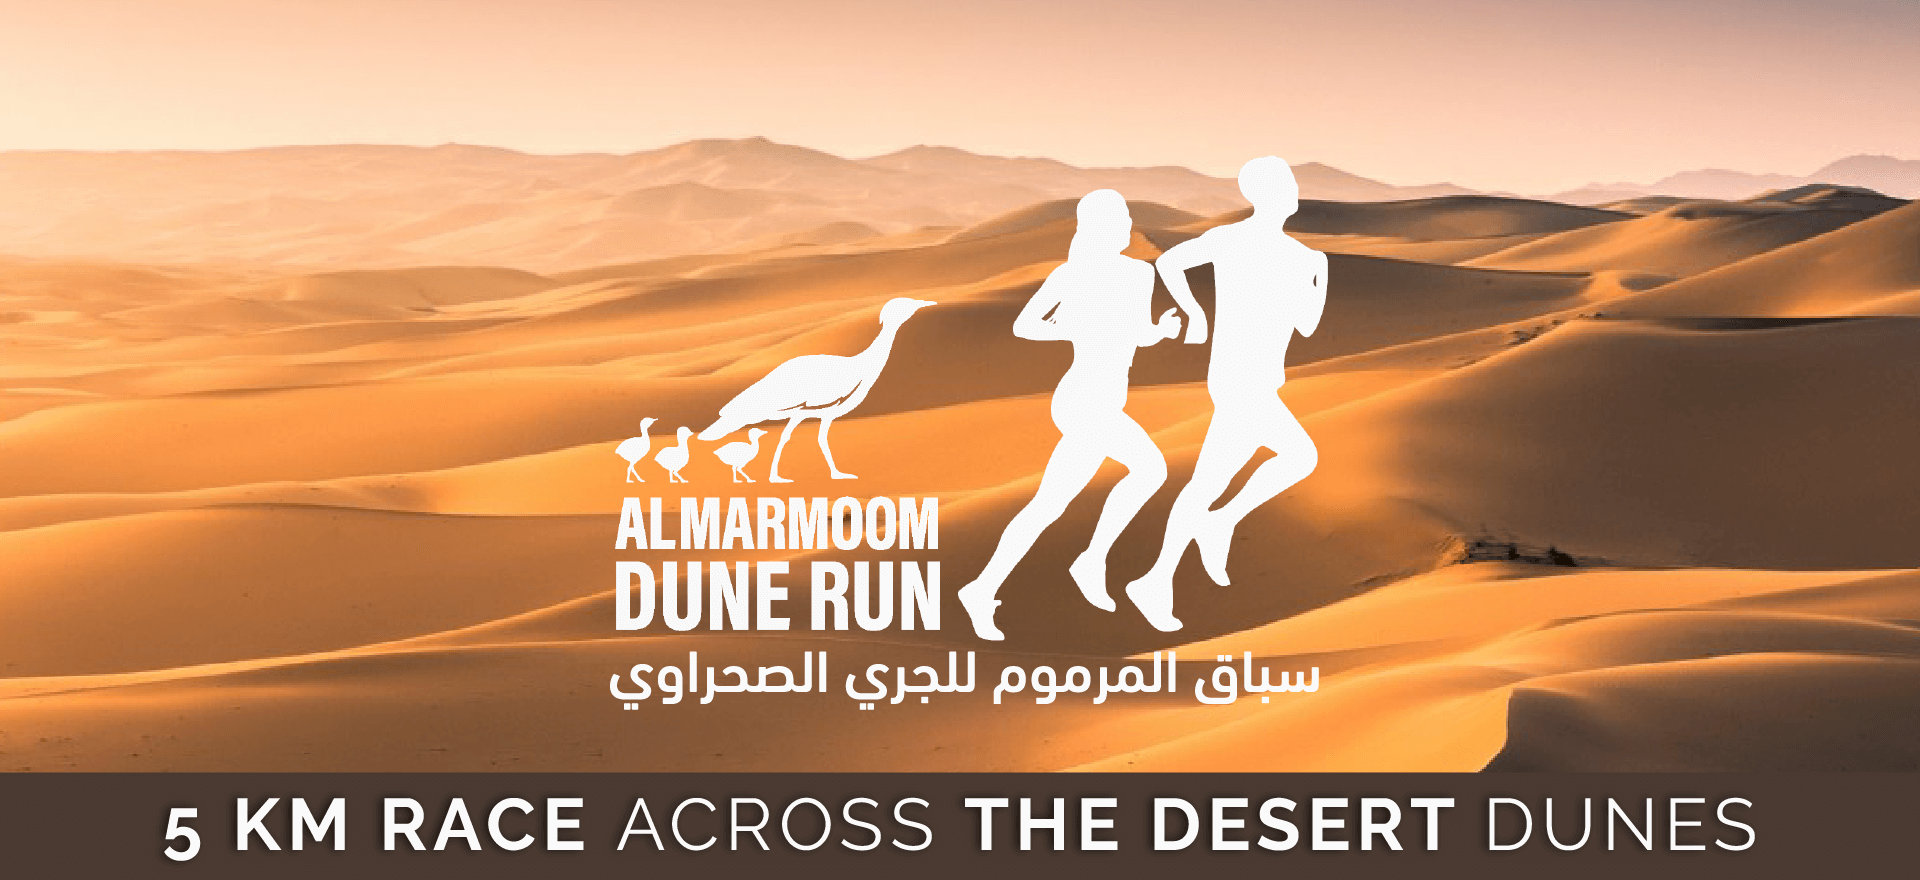 Al Marmoom Dune Run